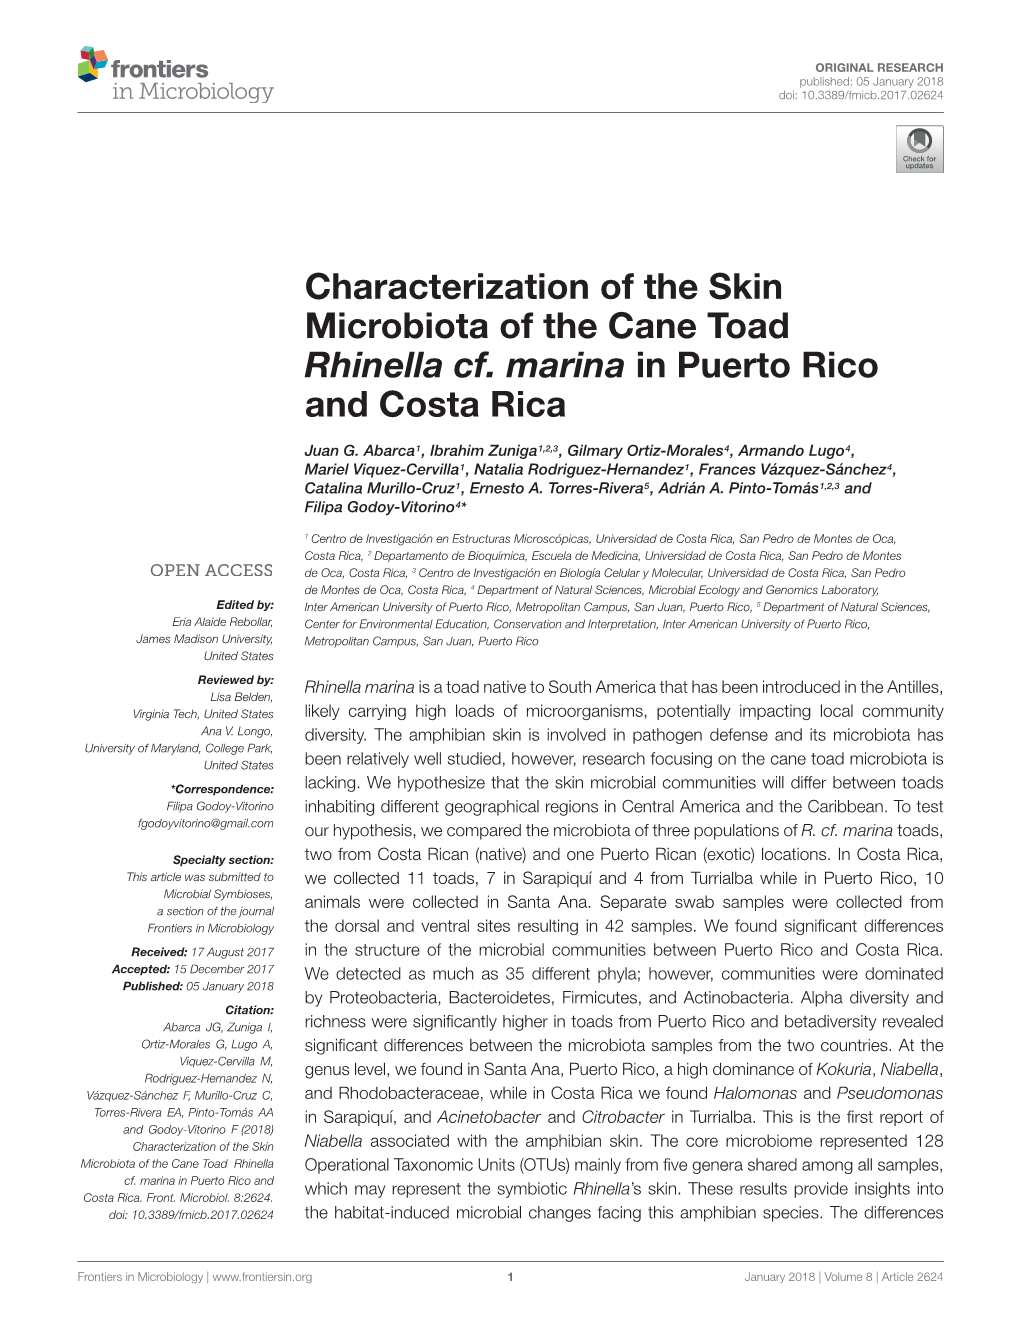 Characterization of the Skin Microbiota of the Cane Toad Rhinella Cf